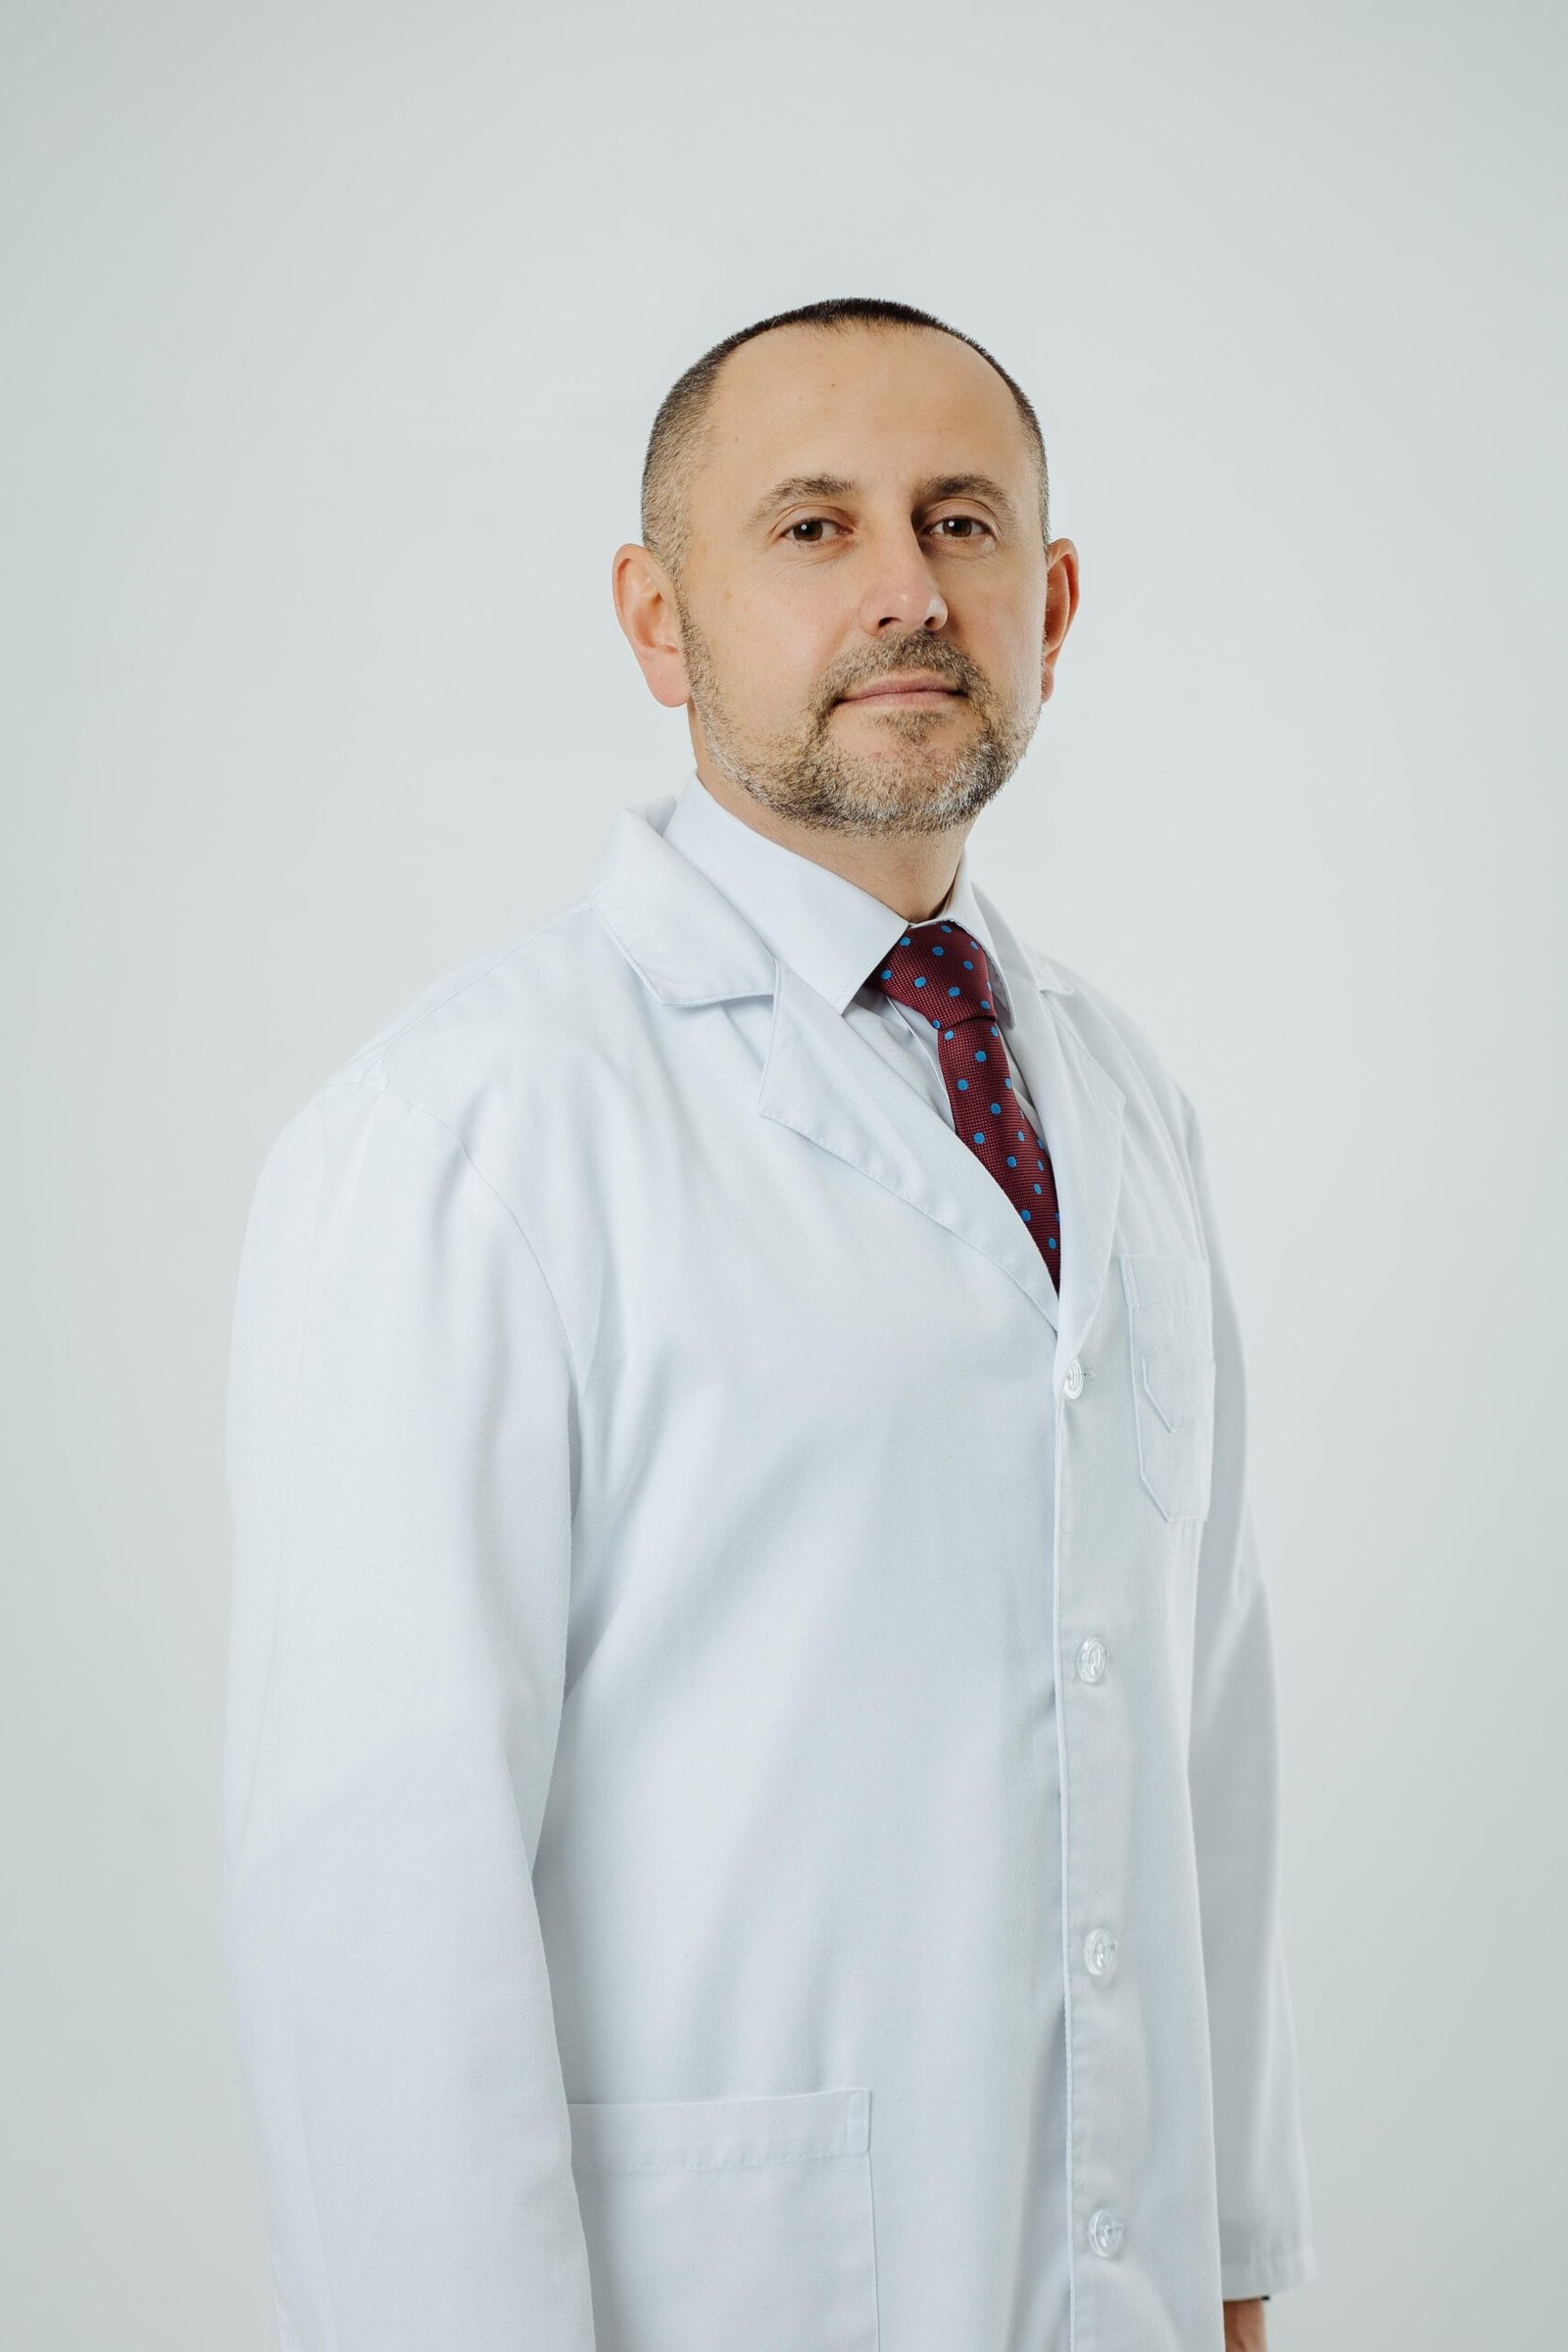 Buchok Oleksandr Oleksandrovych - Vitamínové lekárske centrum